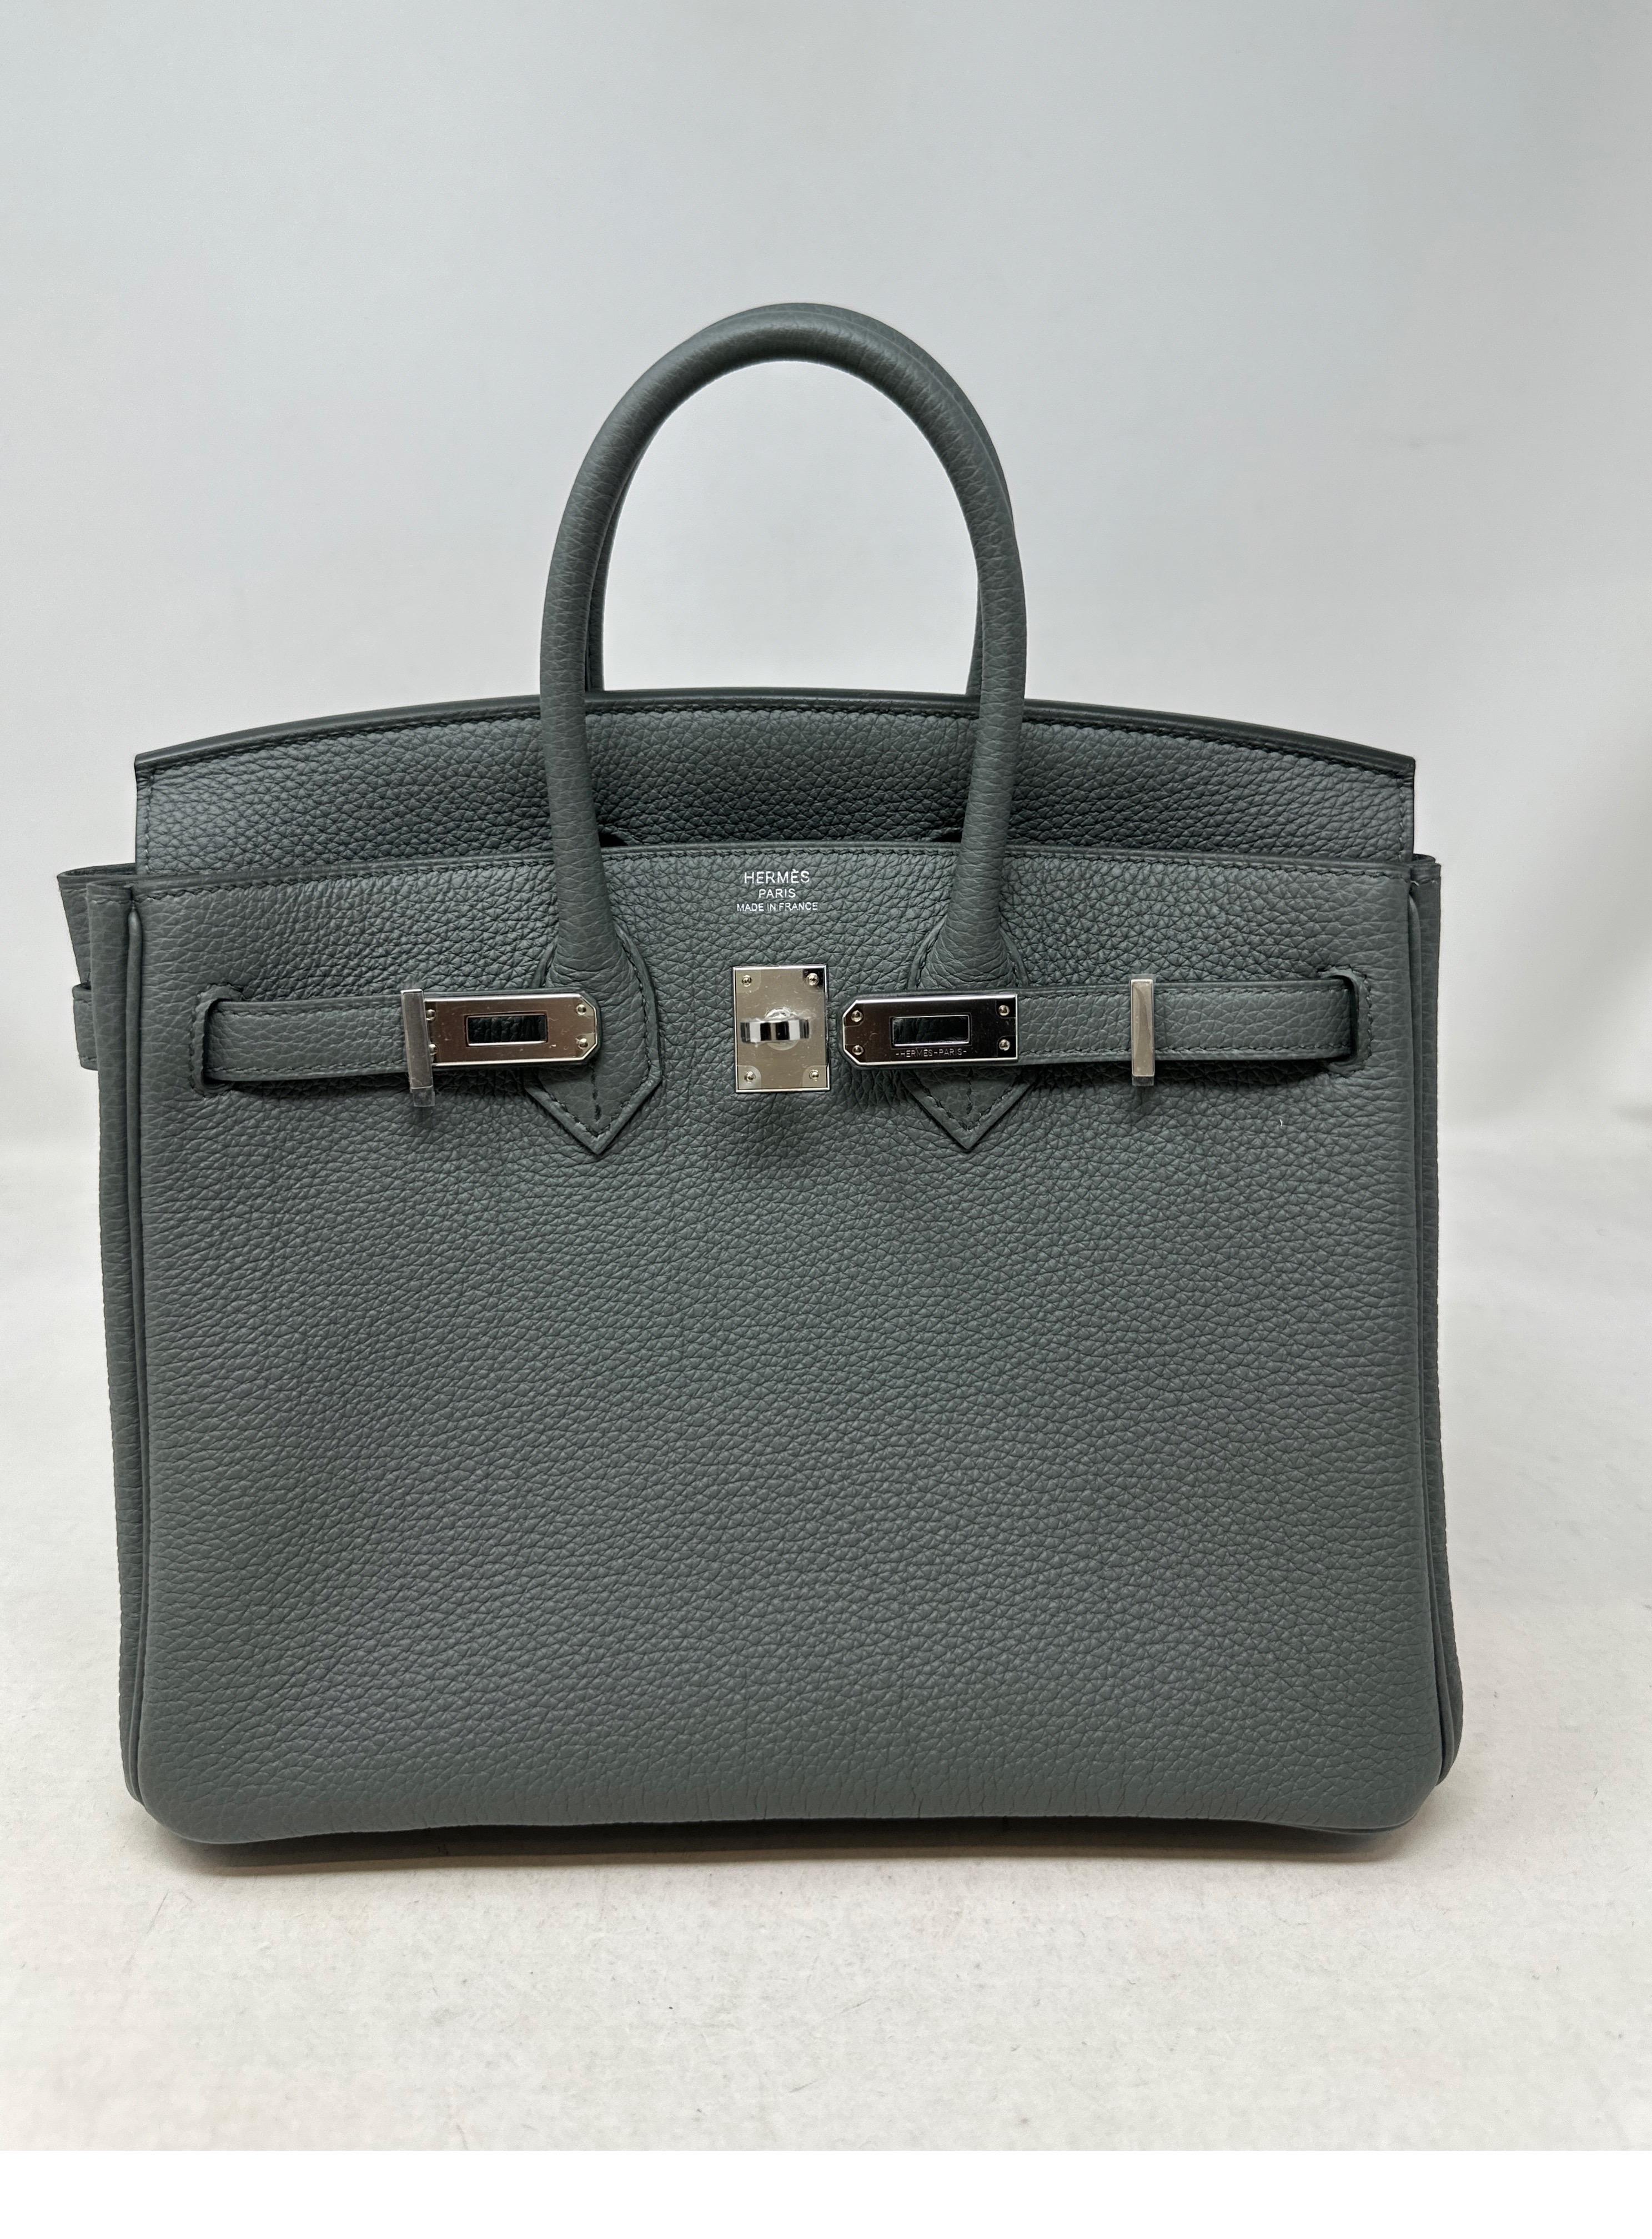 Hermes Vert Amande Birkin 25 Bag. Brand new. Rare light grey green color. Togo leather. Palladium silver hardware. Includes clochette, lock, keys, dust bag and box. Full set. Guaranteed authentic. 